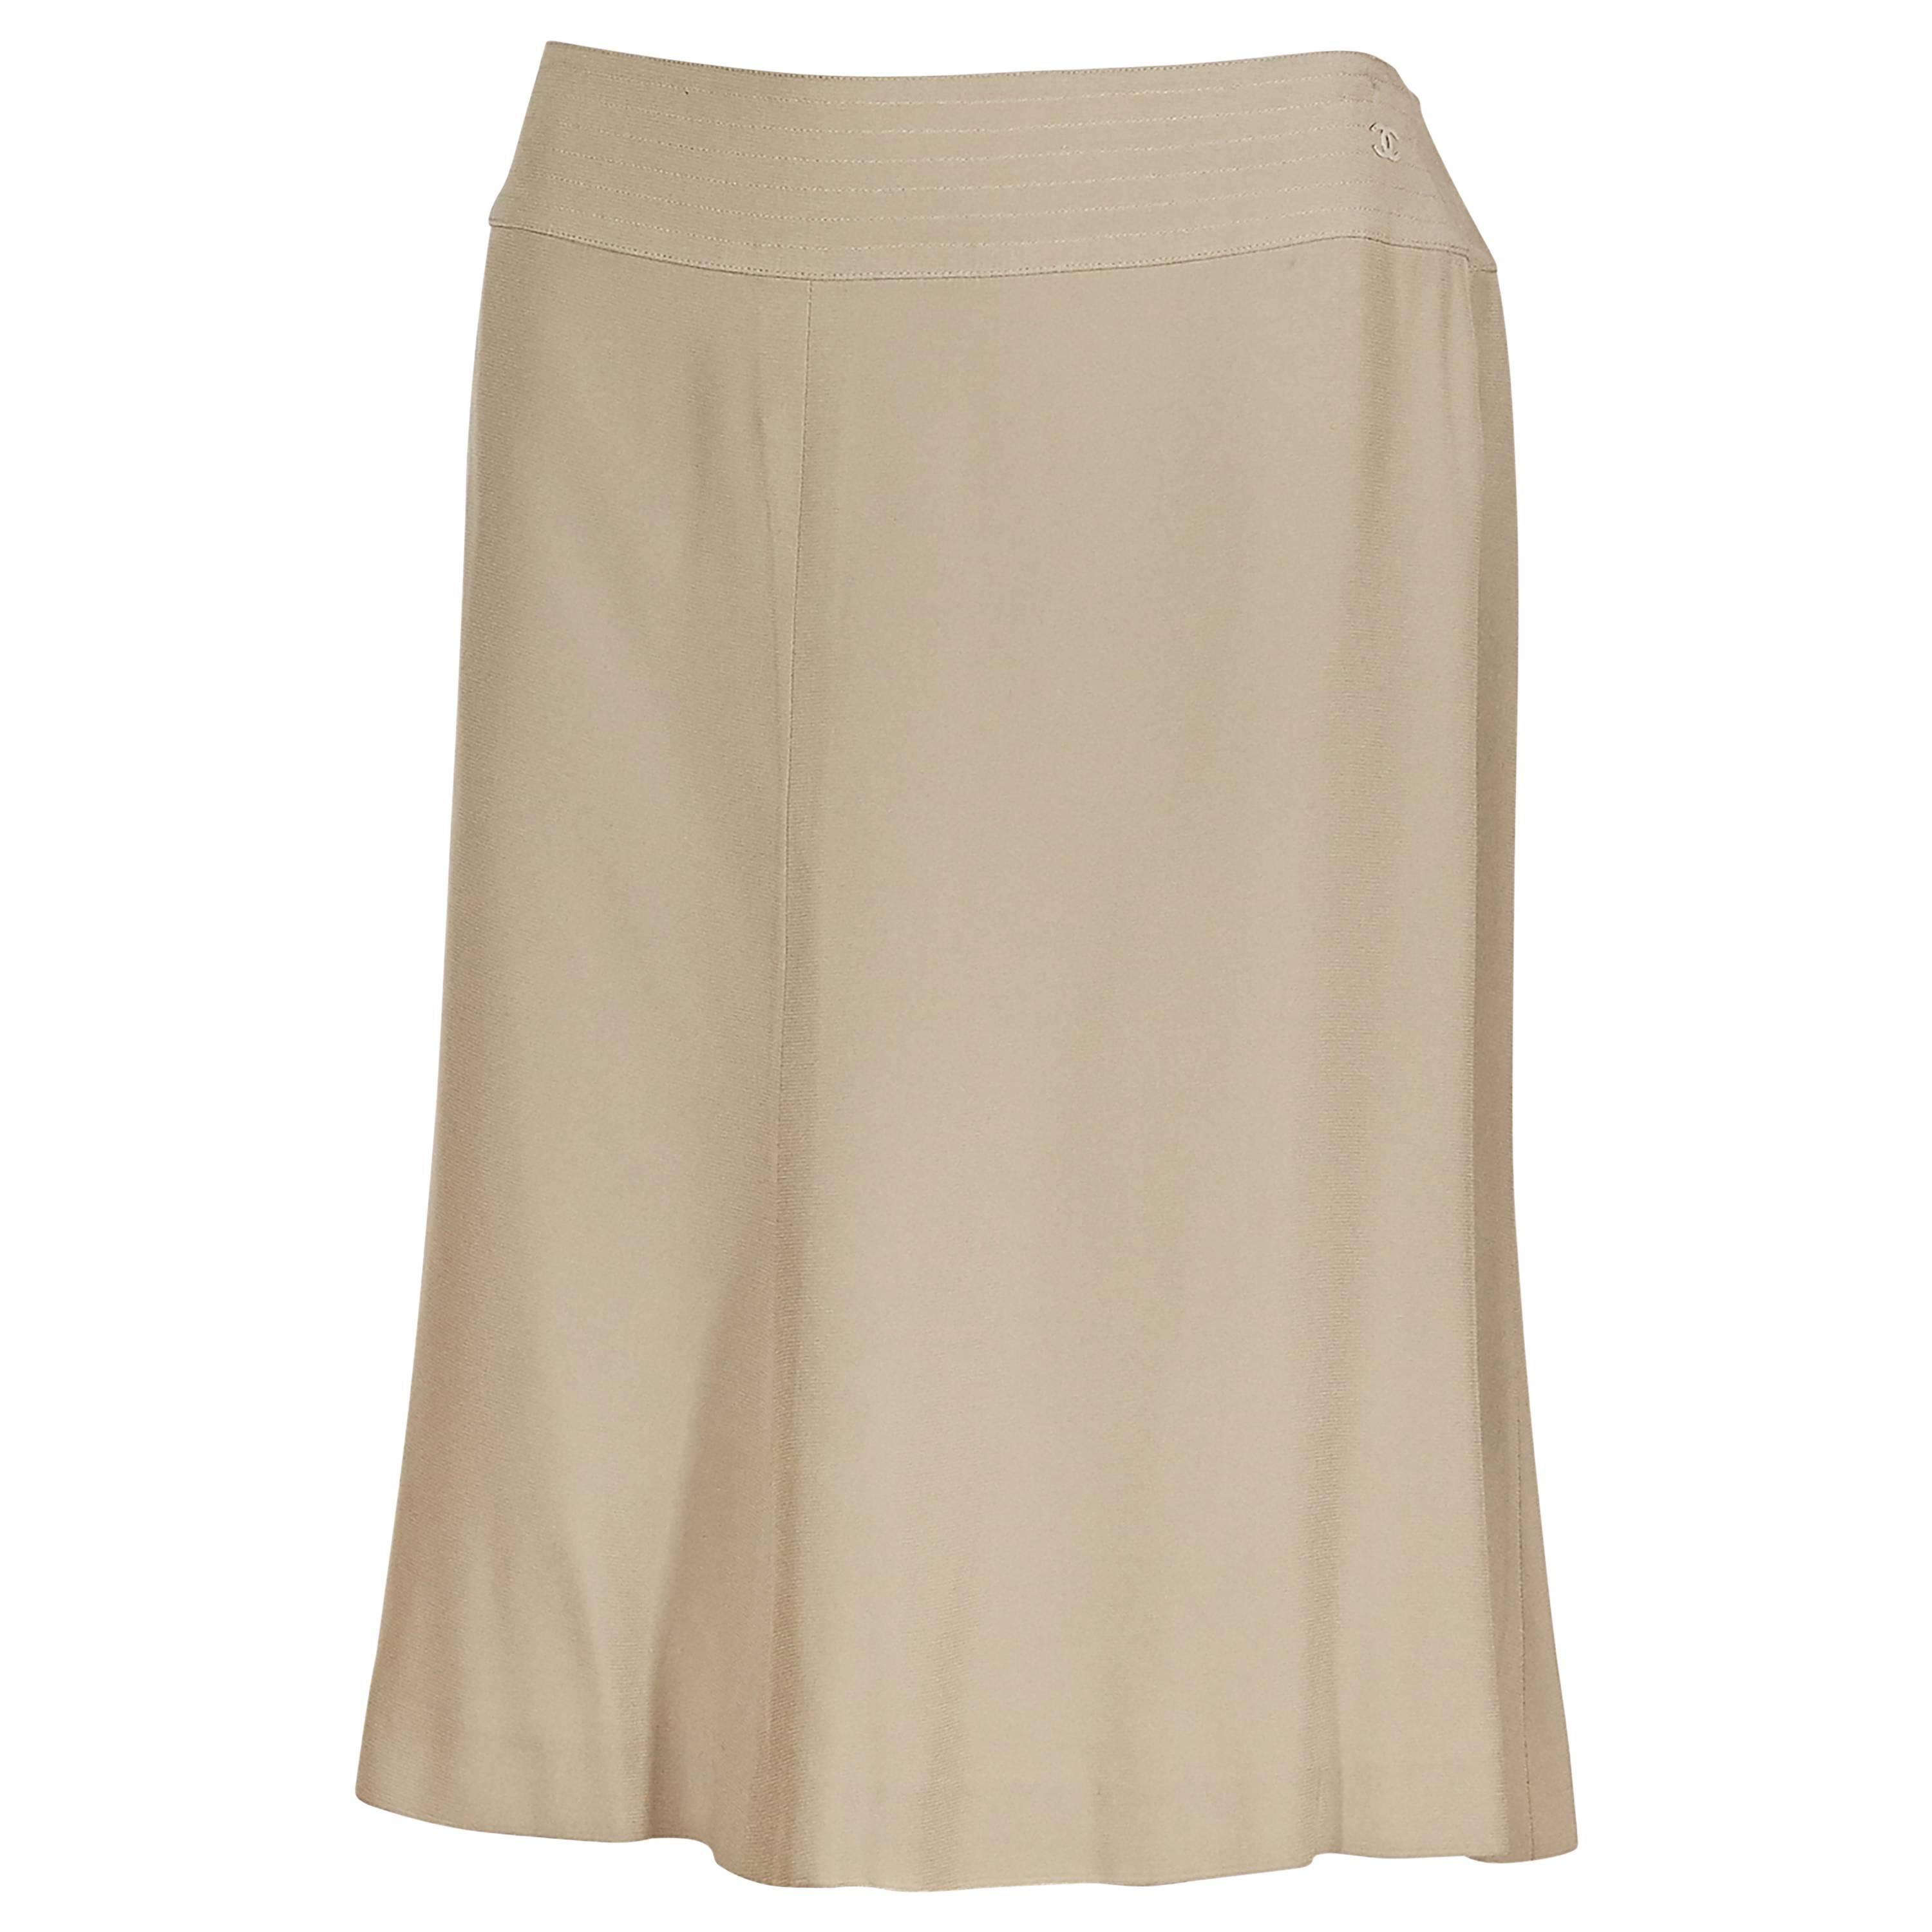 Tan Chanel Silk A-Line Skirt